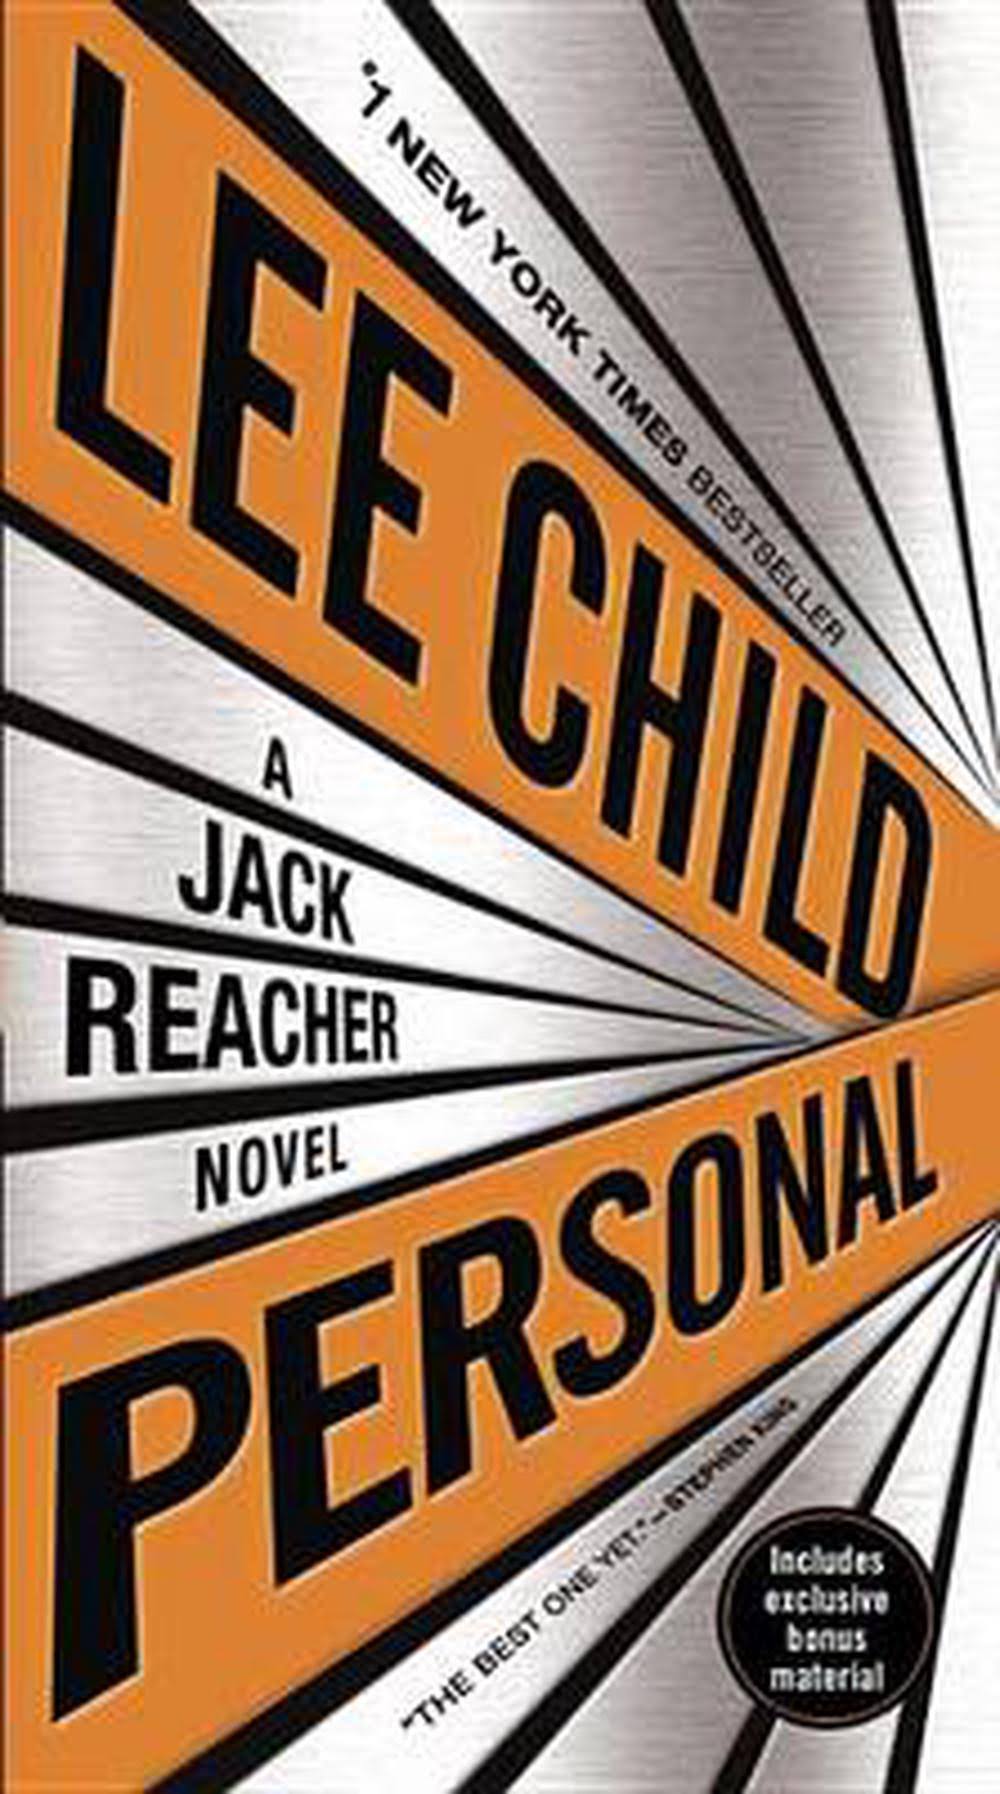 Personal: A Jack Reacher Novel - Lee Child